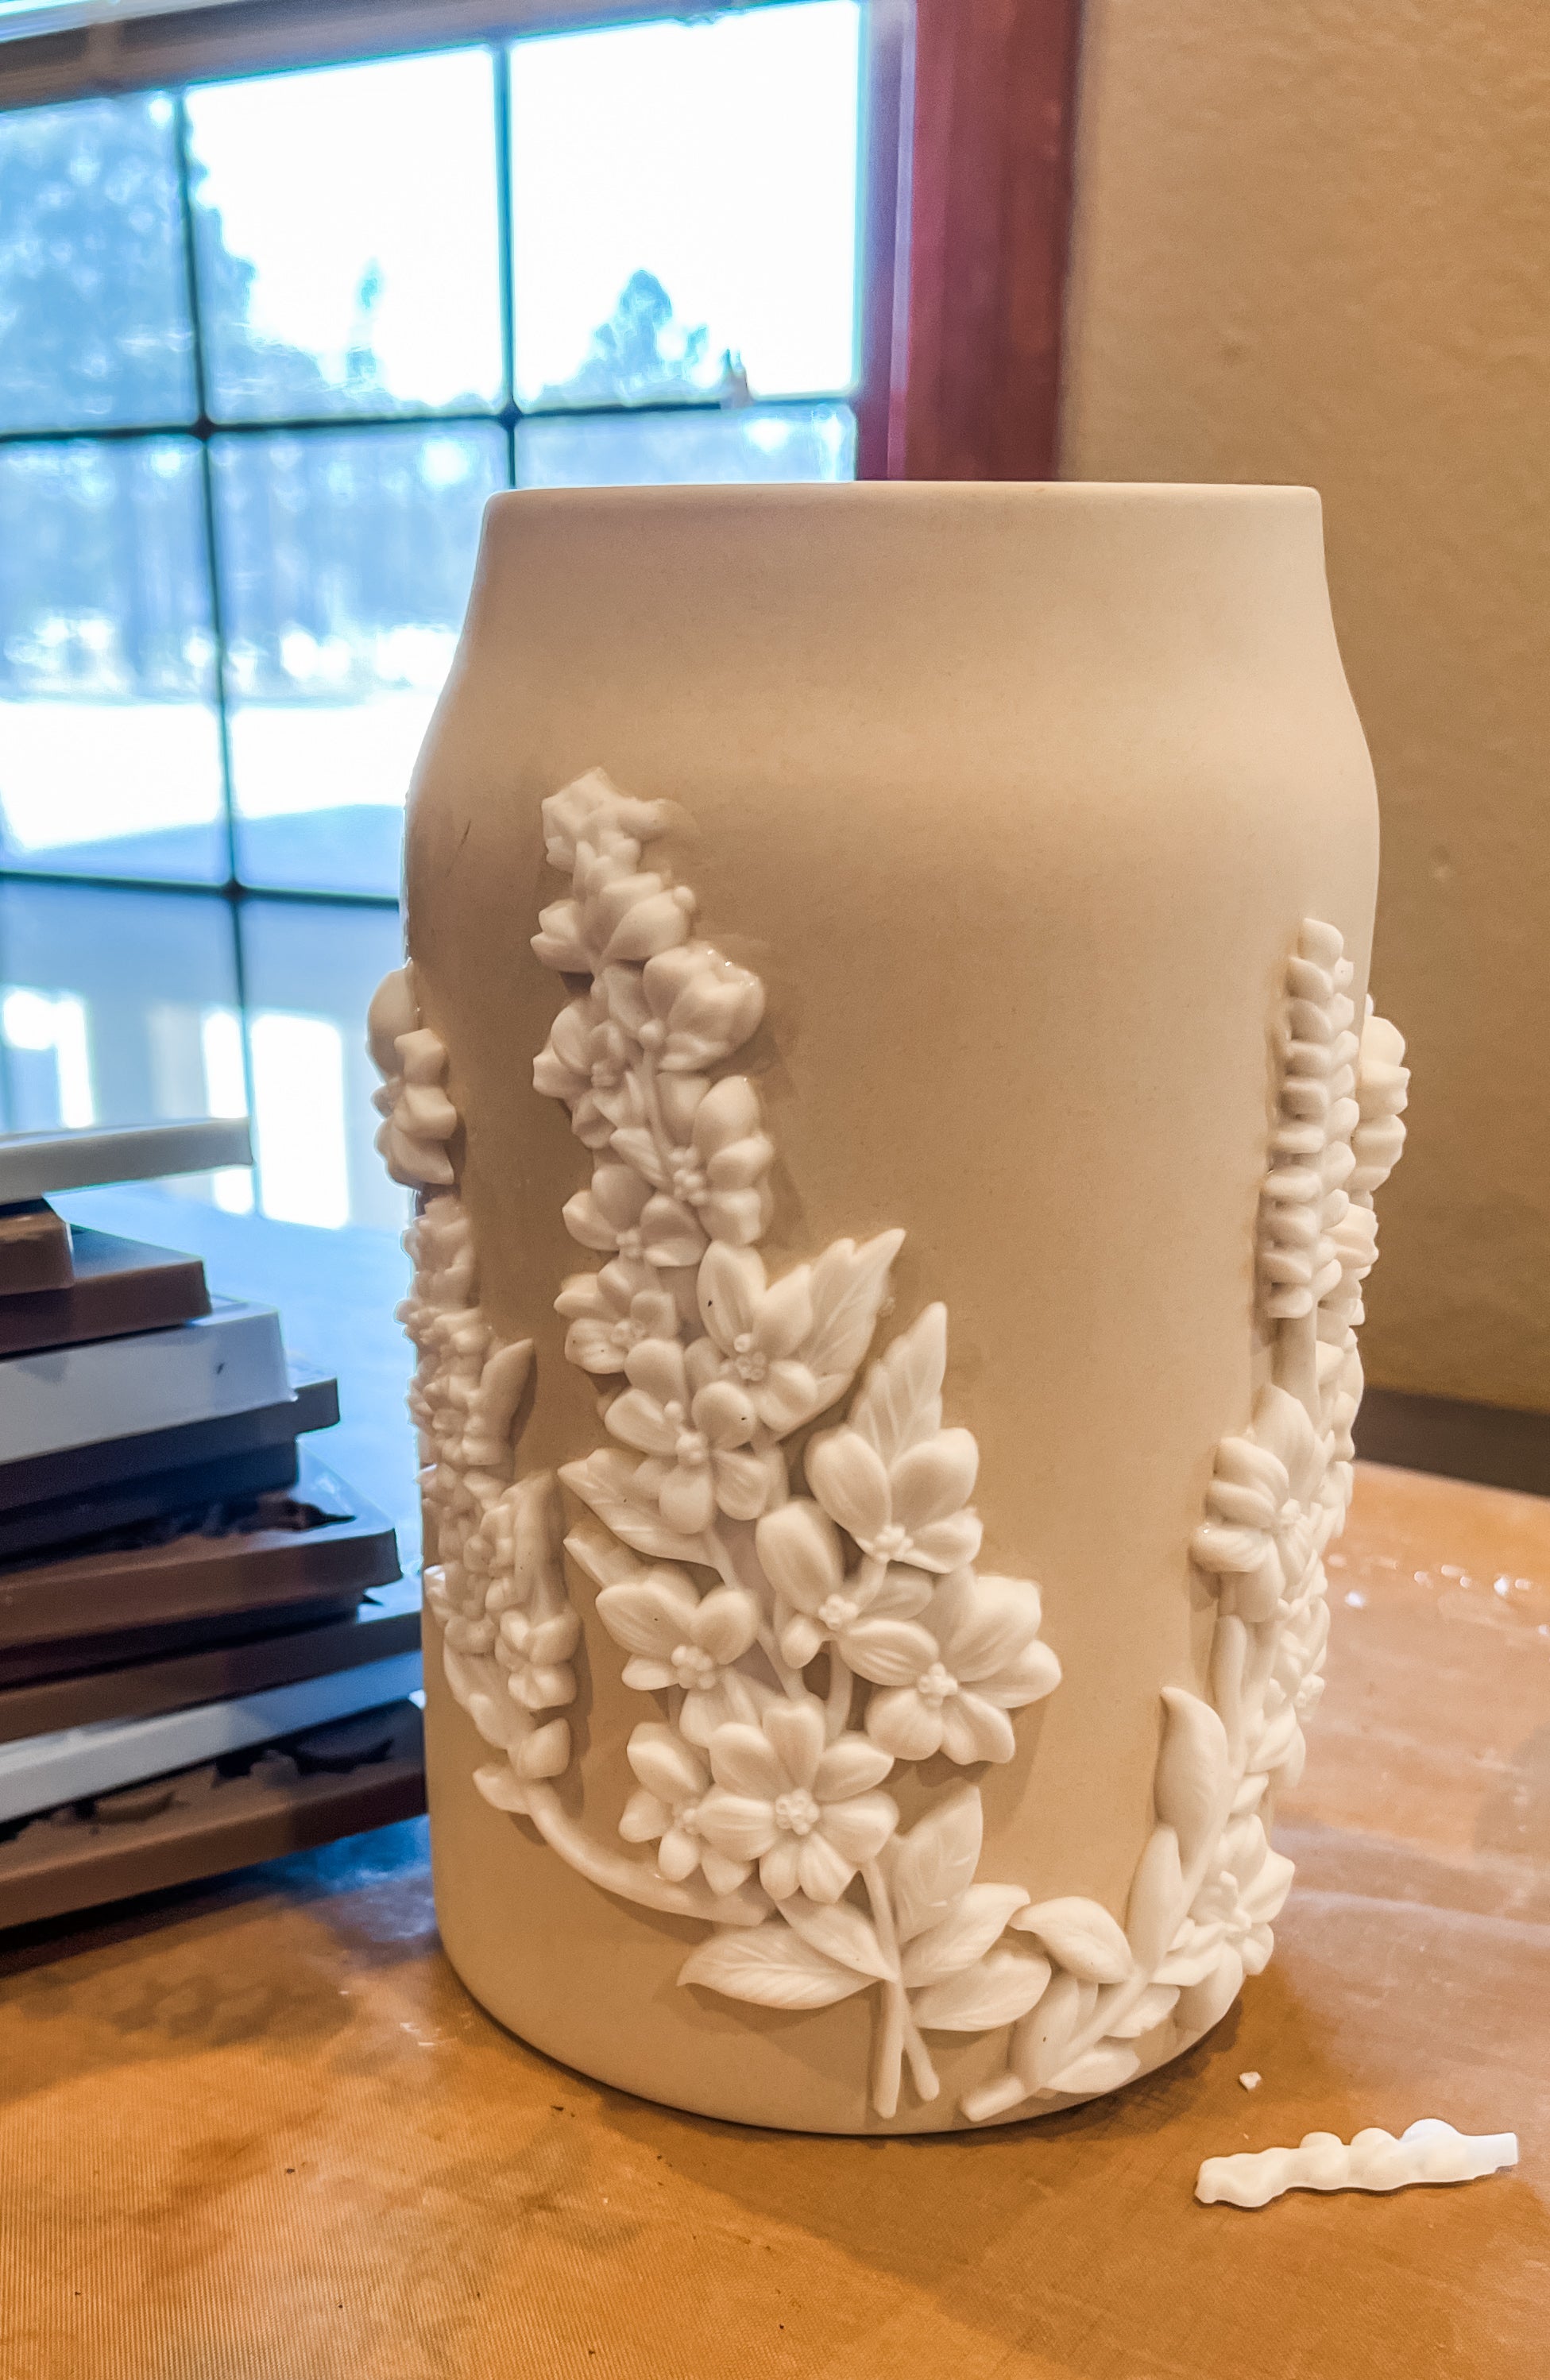 Vase and Moulds Apr. 20